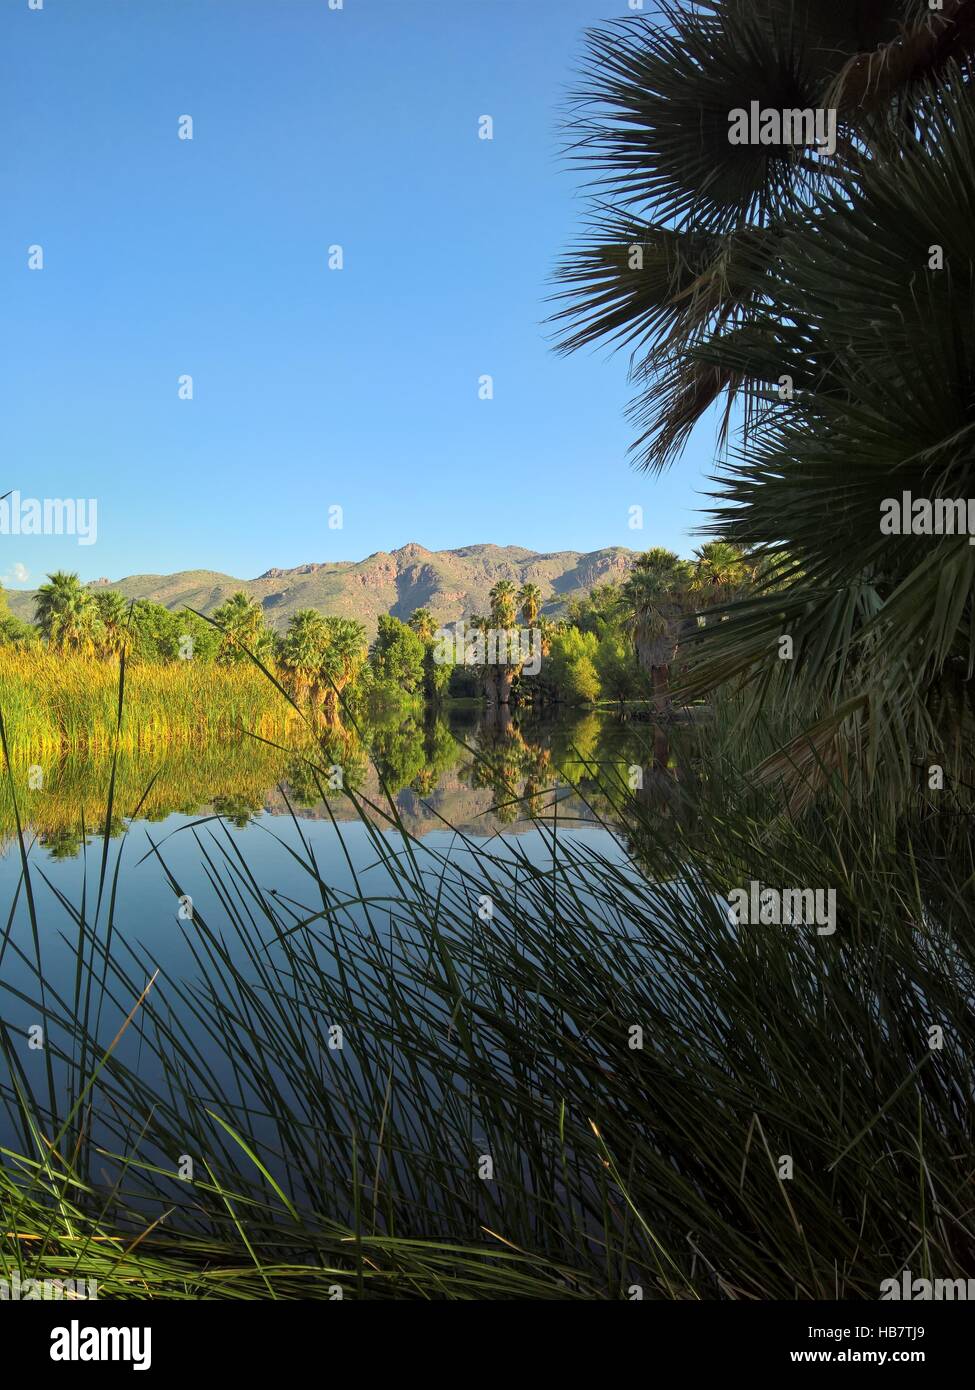 Roy P. Drachman Agua Caliente Parque Regional, a mediados de 2016. 12325 E Roger Rd, Tucson, AZ 85749 Condado de Pima. Hot Springs, Lago, palmeras, césped y picnic Foto de stock